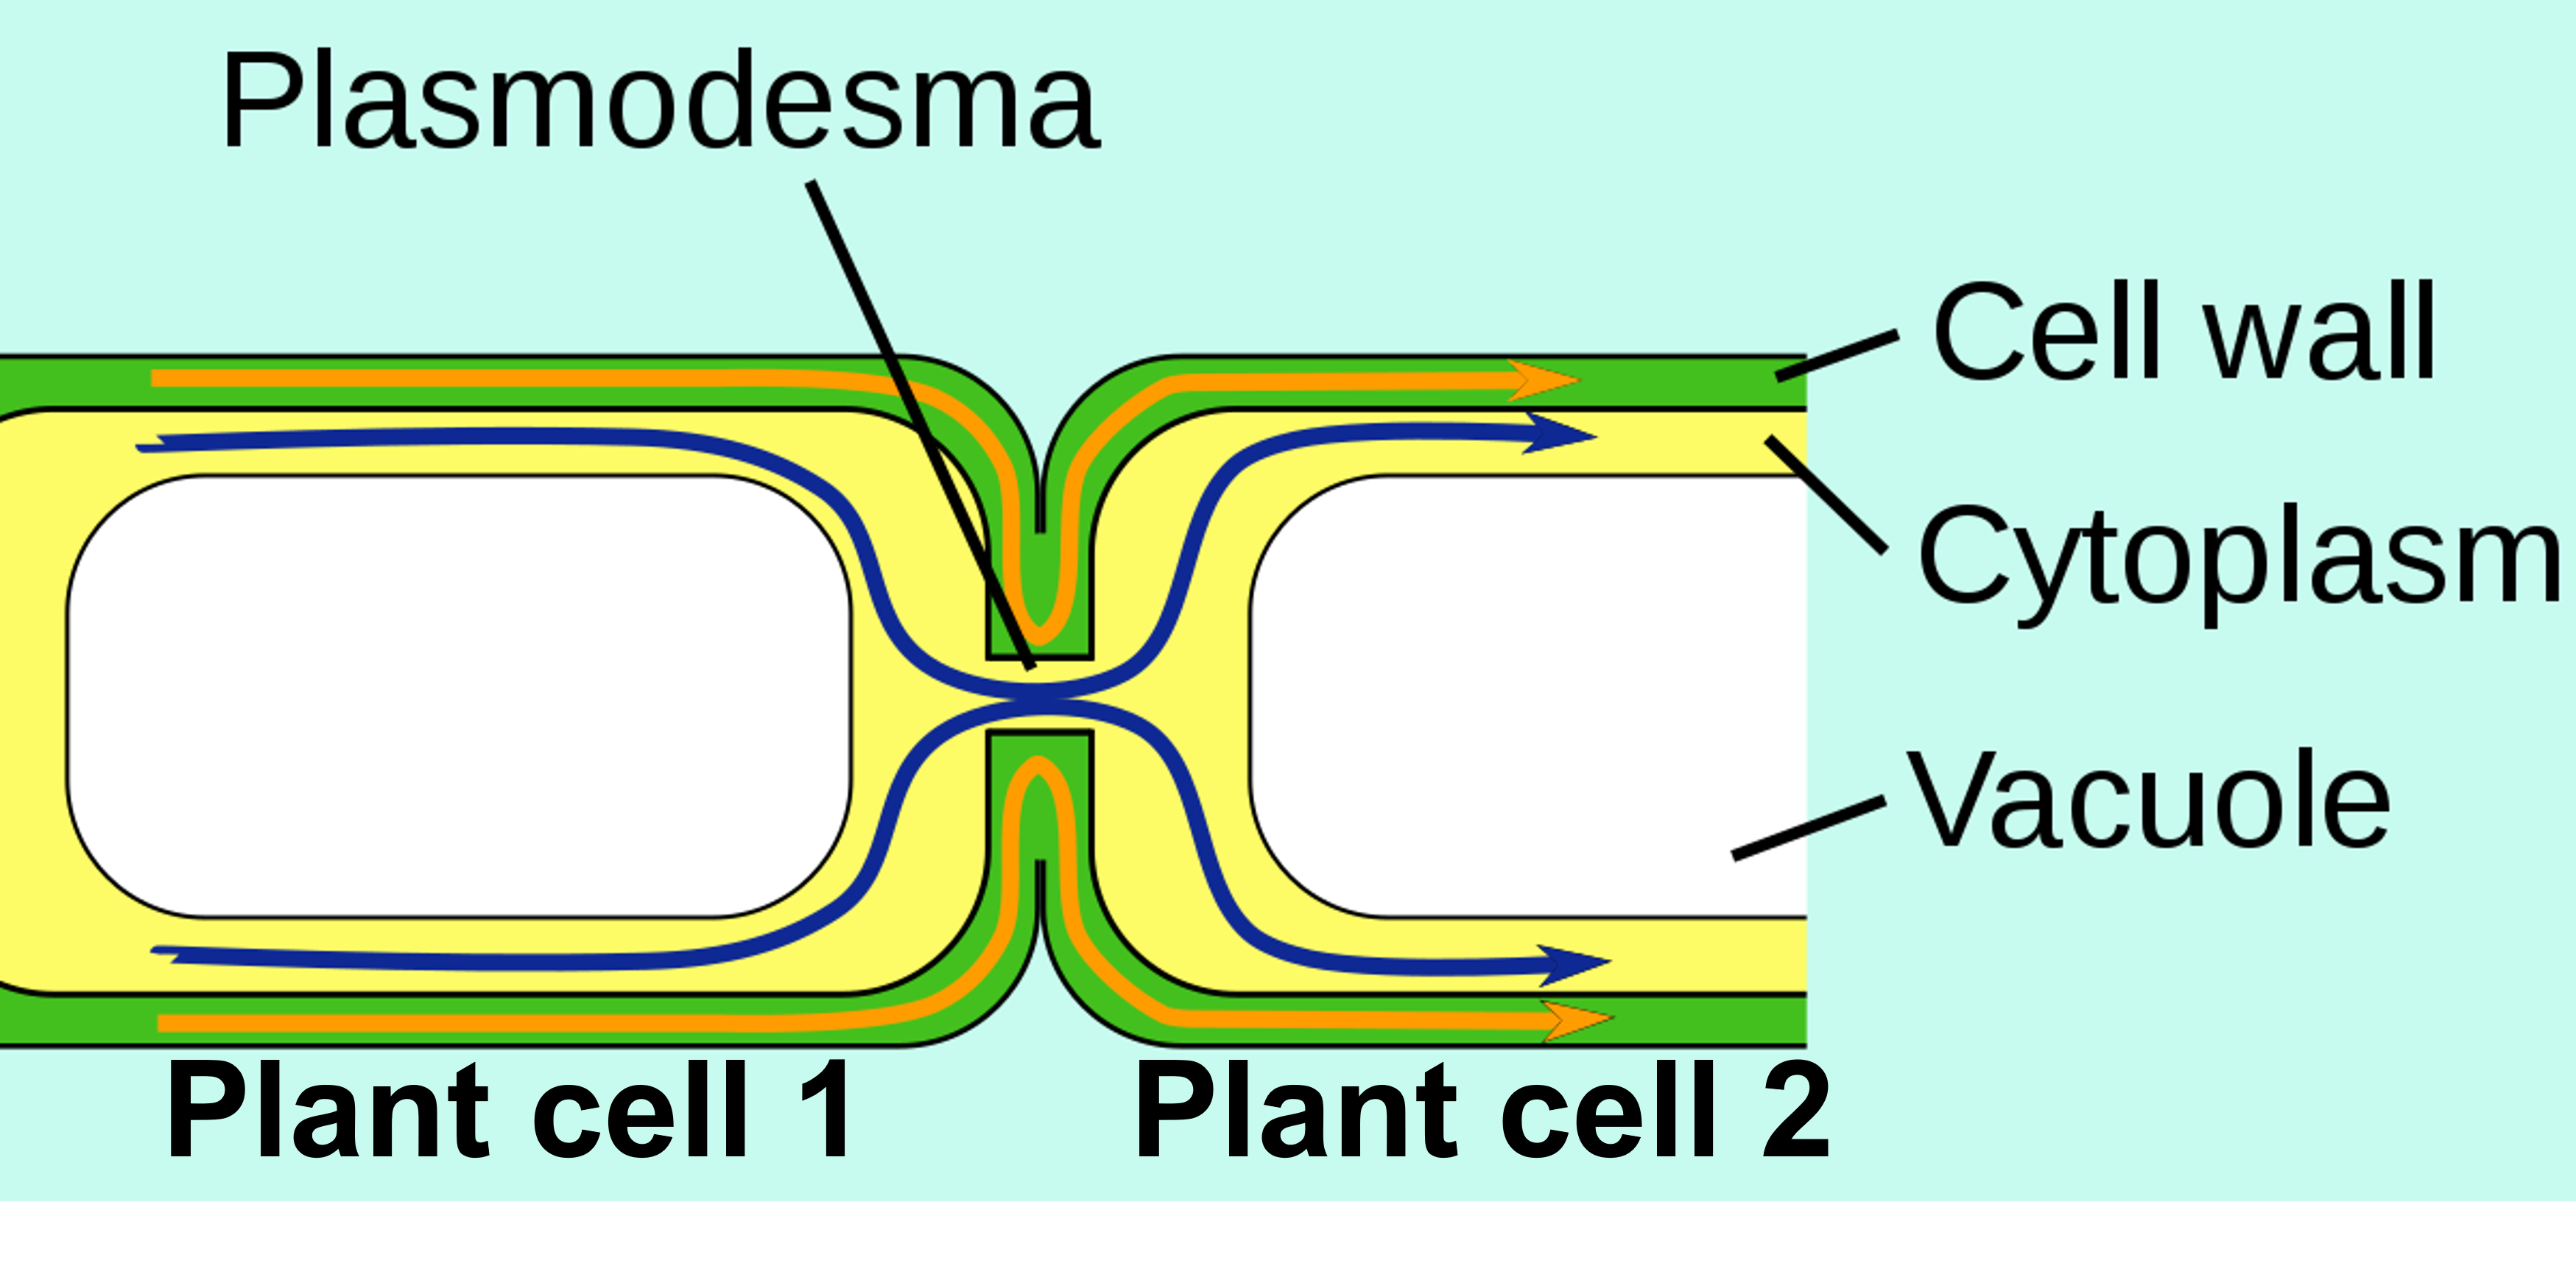 movement of virus particles through plasmodesmata